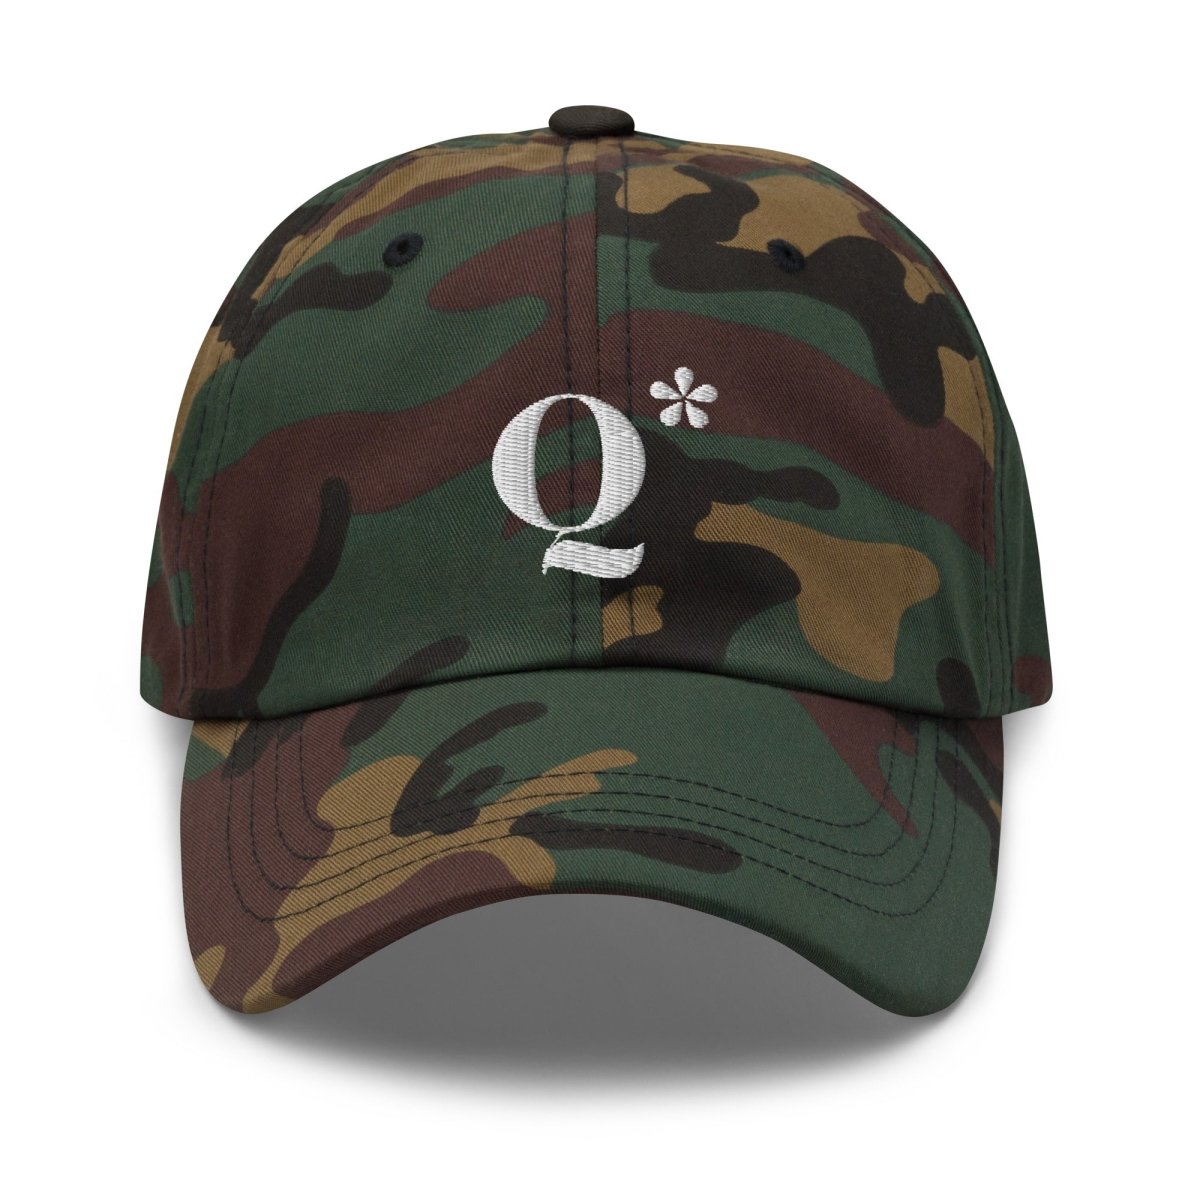 Q* (Q - Star) Embroidered Cap 3 - Green Camo - AI Store